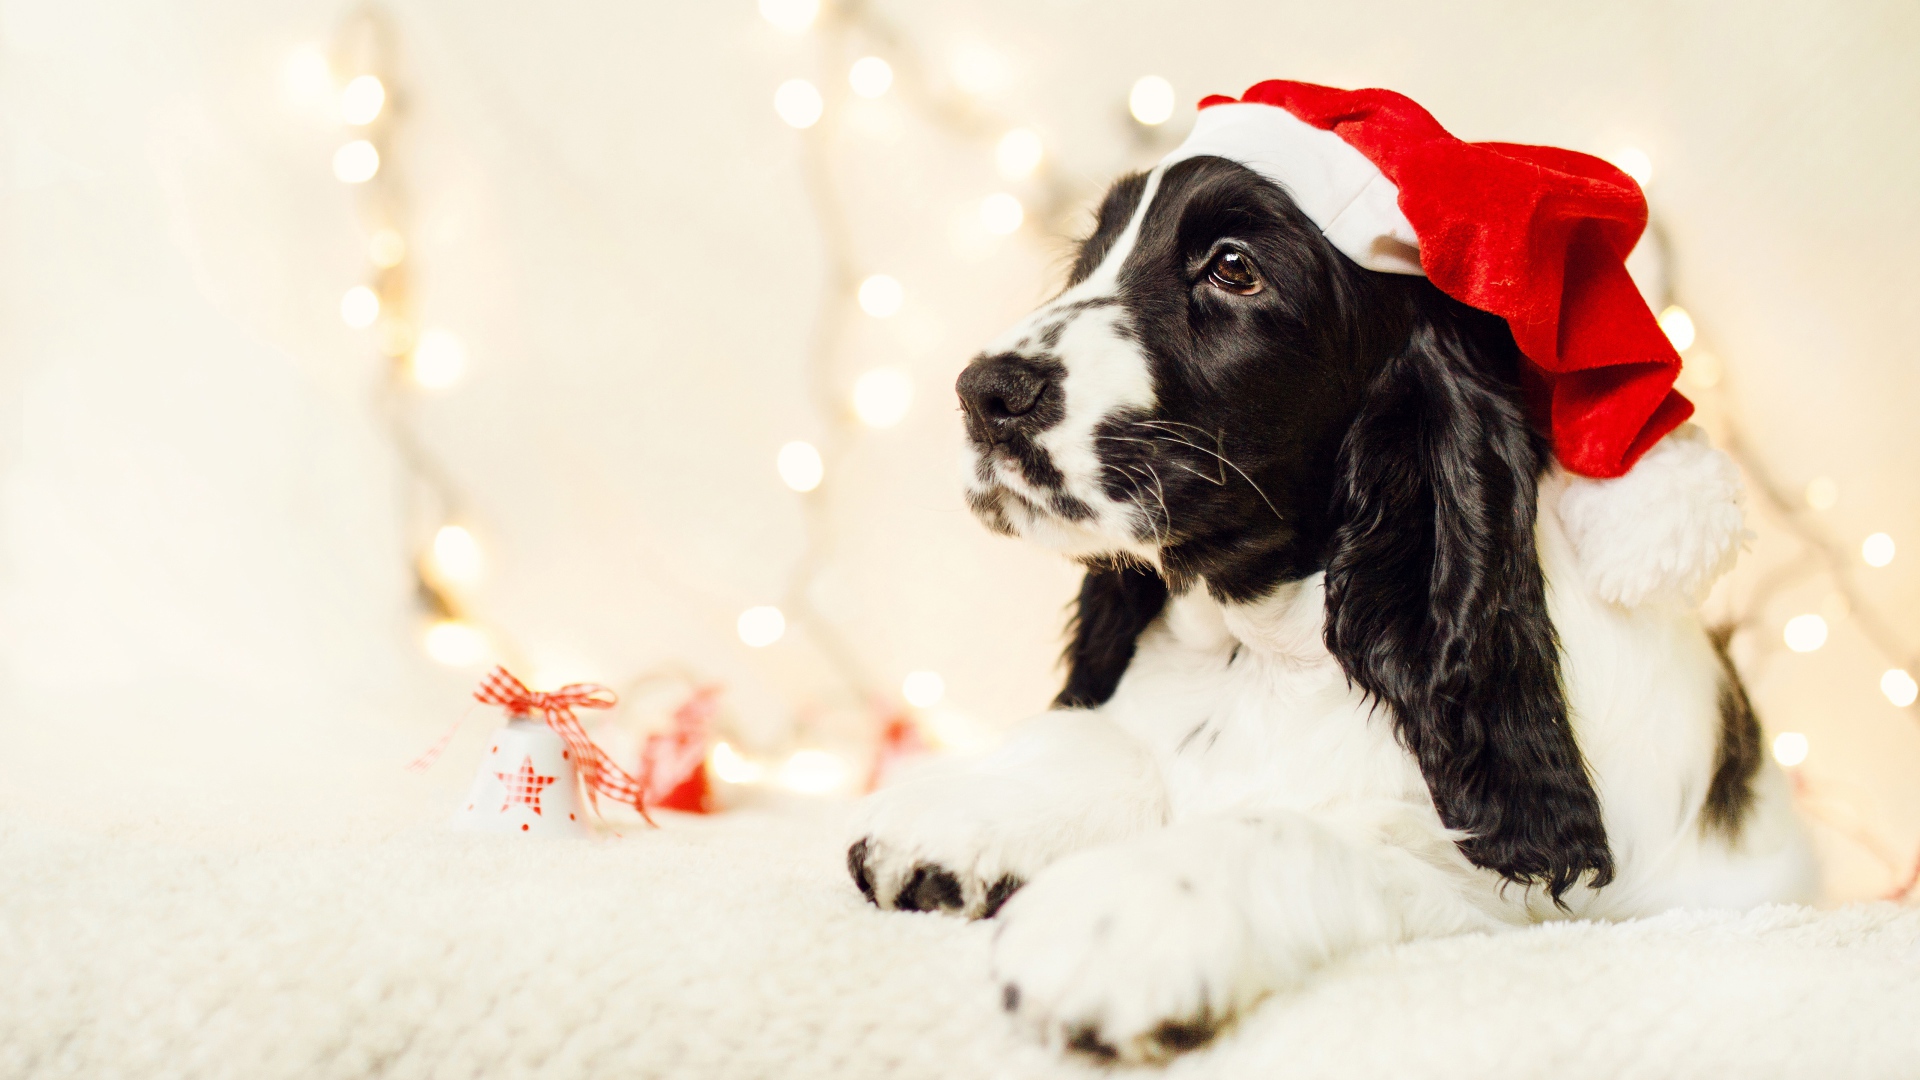 Собака породы сеттер в шапке Санта Клауса 